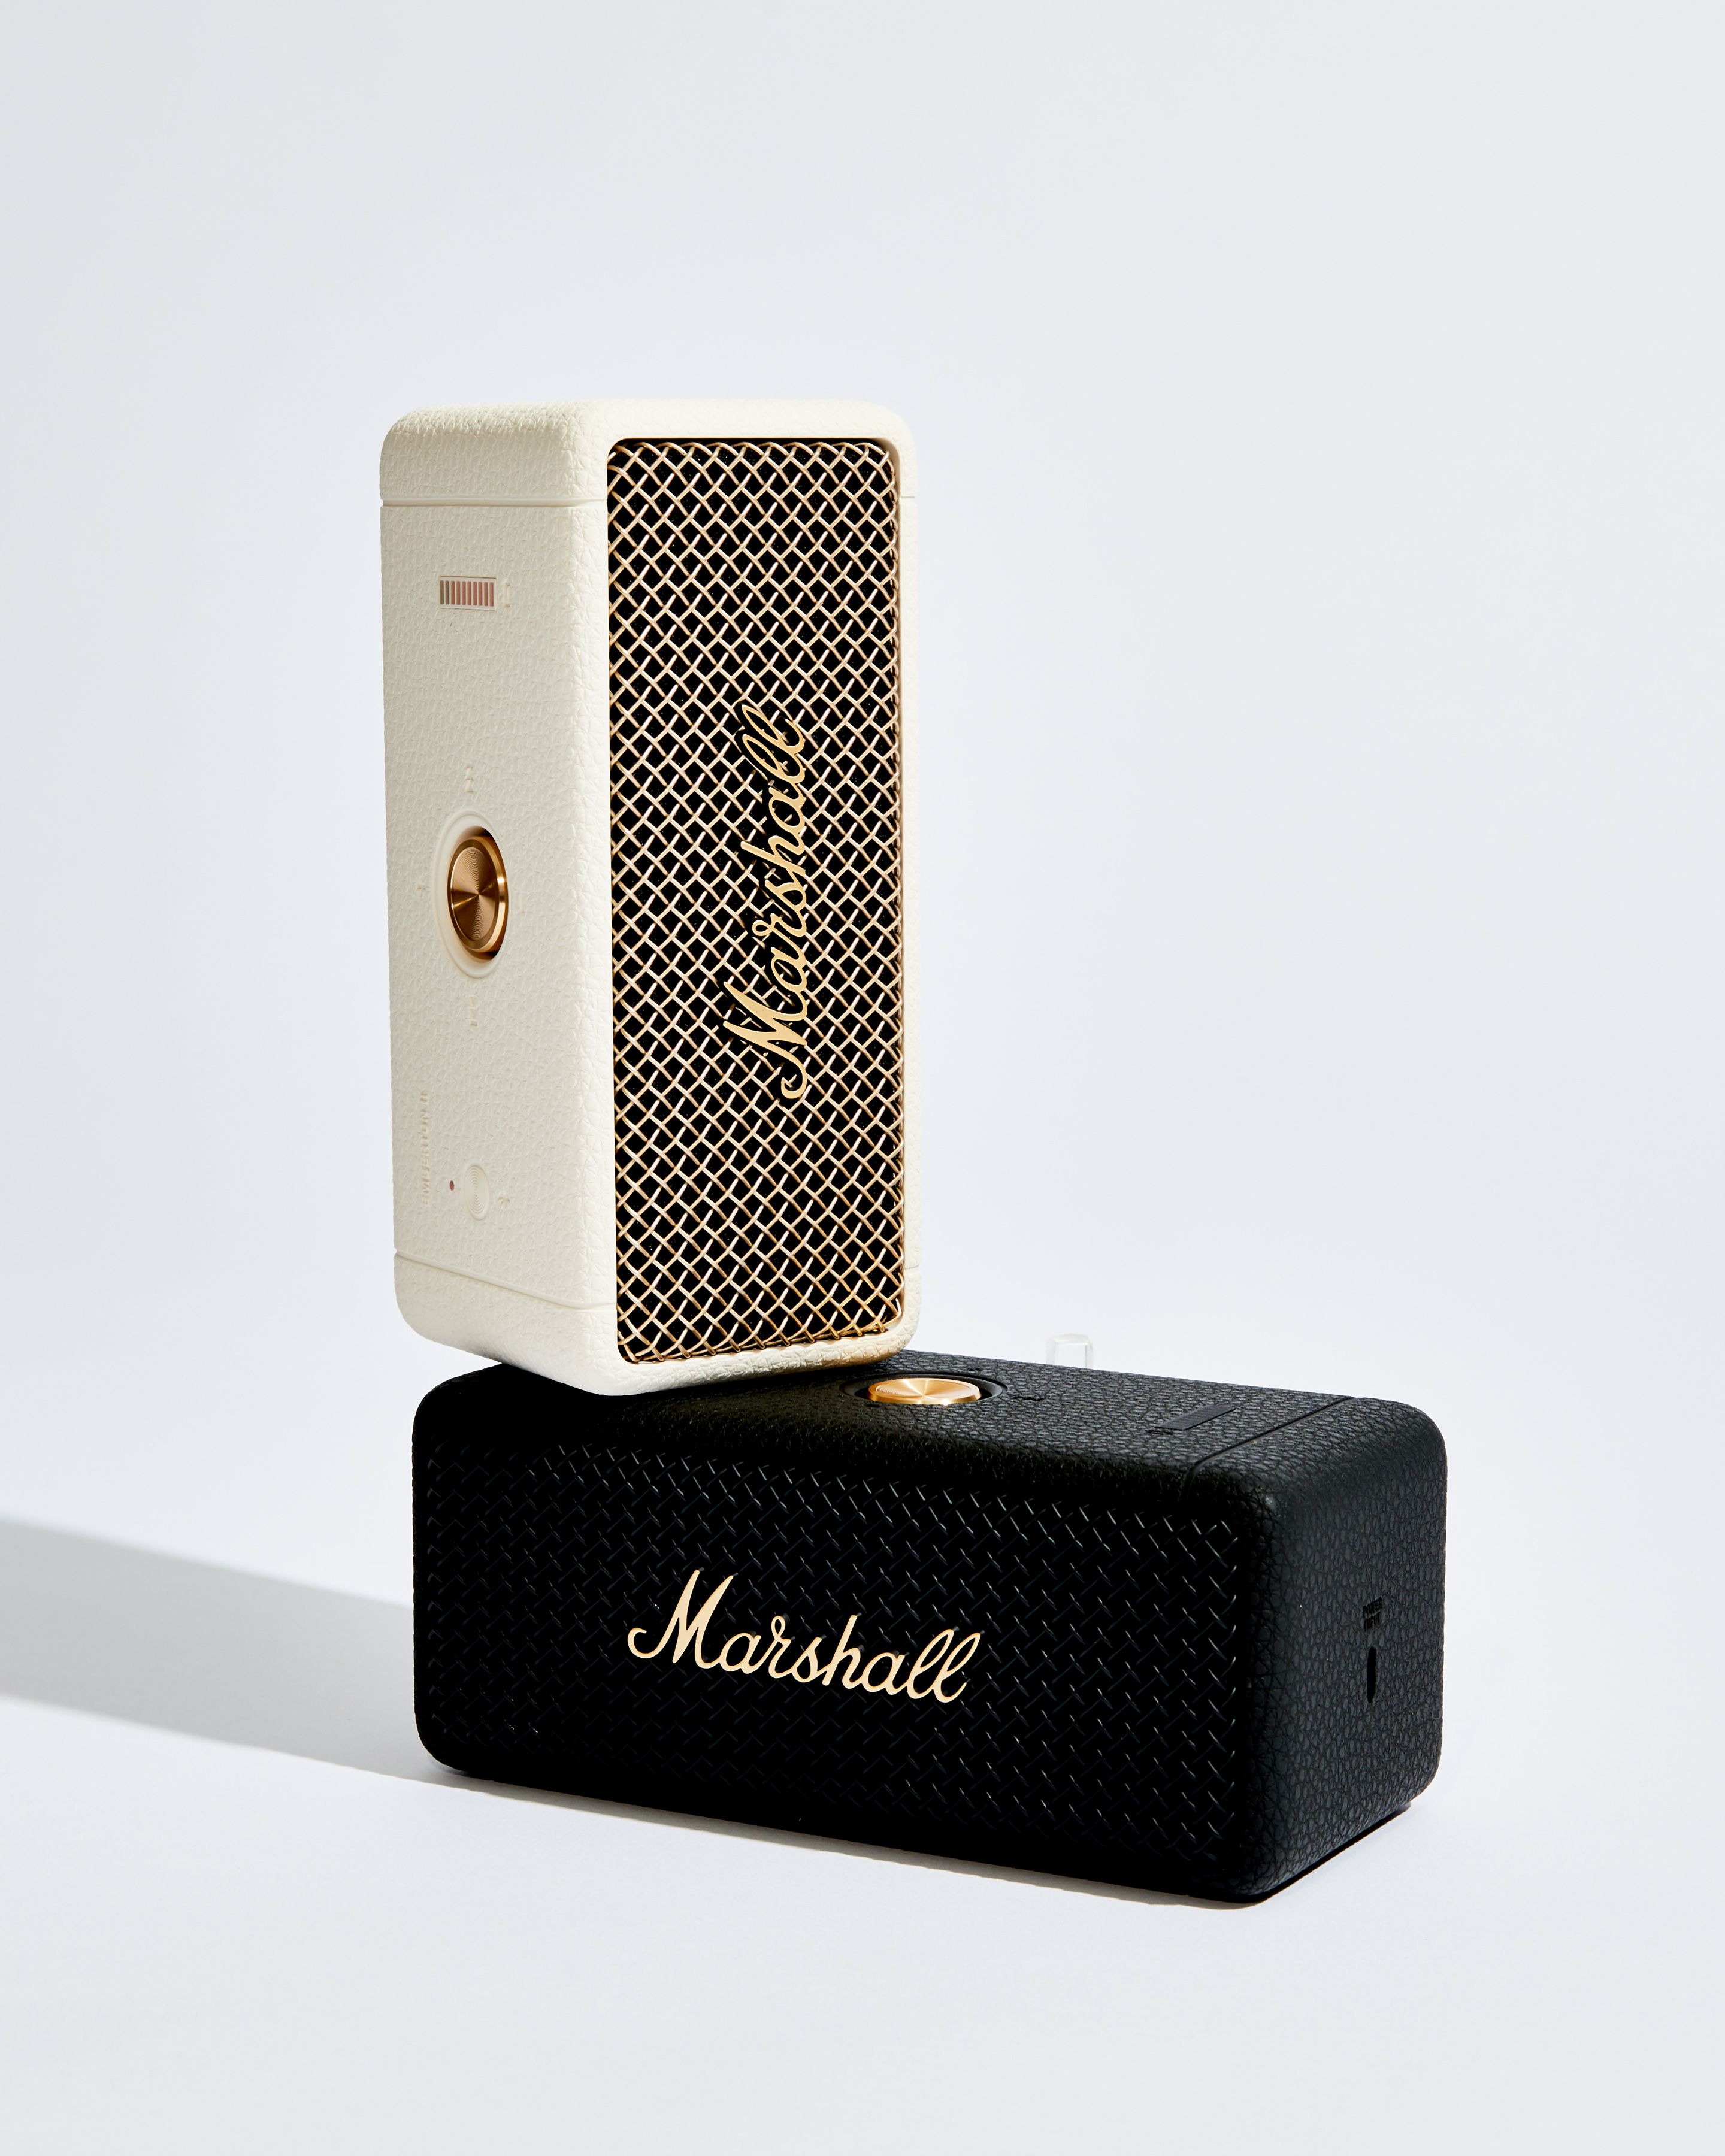 Marshall Emberton Review: Best Bluetooth Speaker